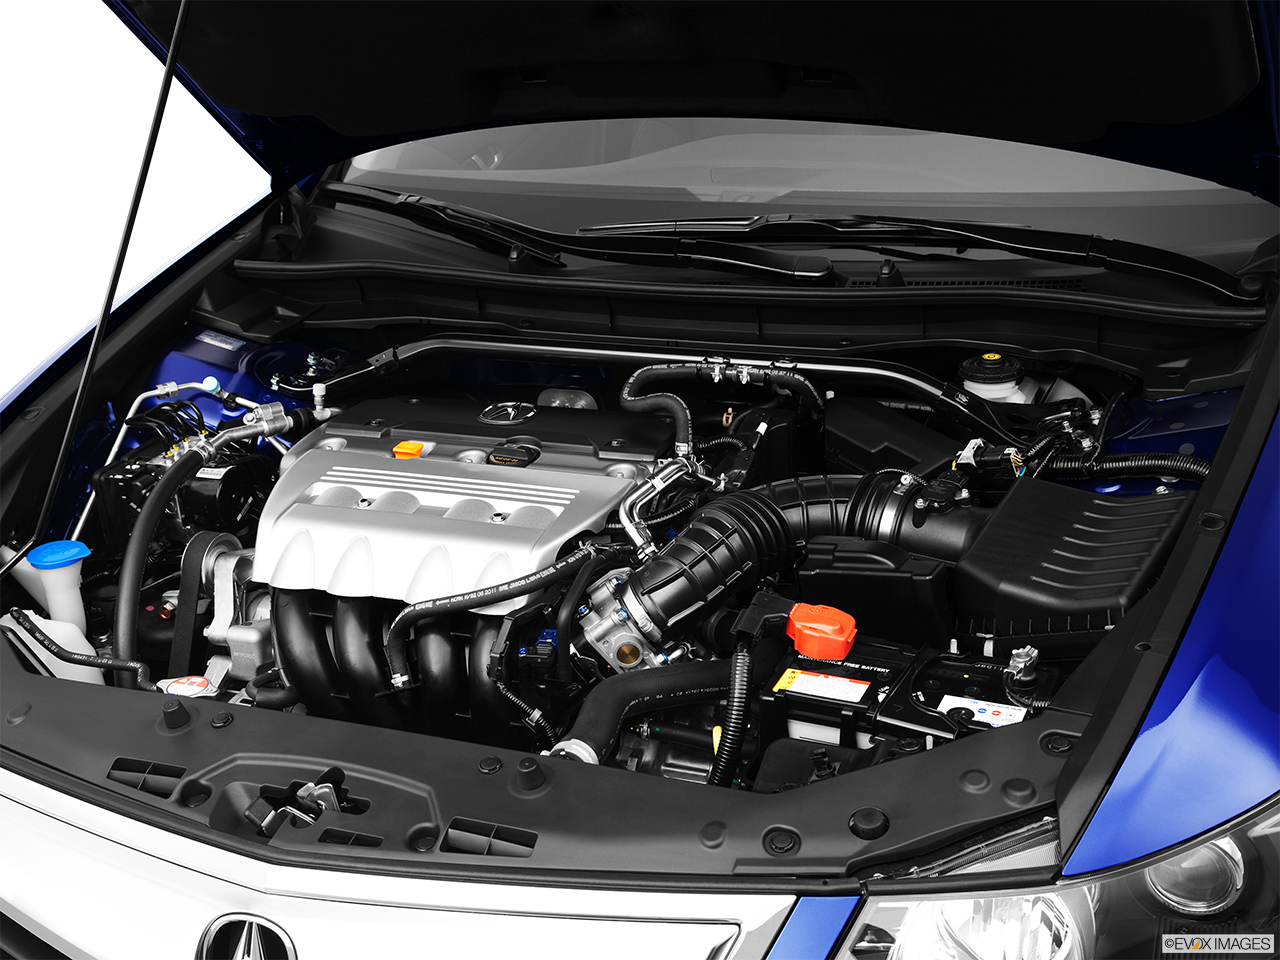 2012 Acura TSX TSX 5-speed Automatic Engine. 